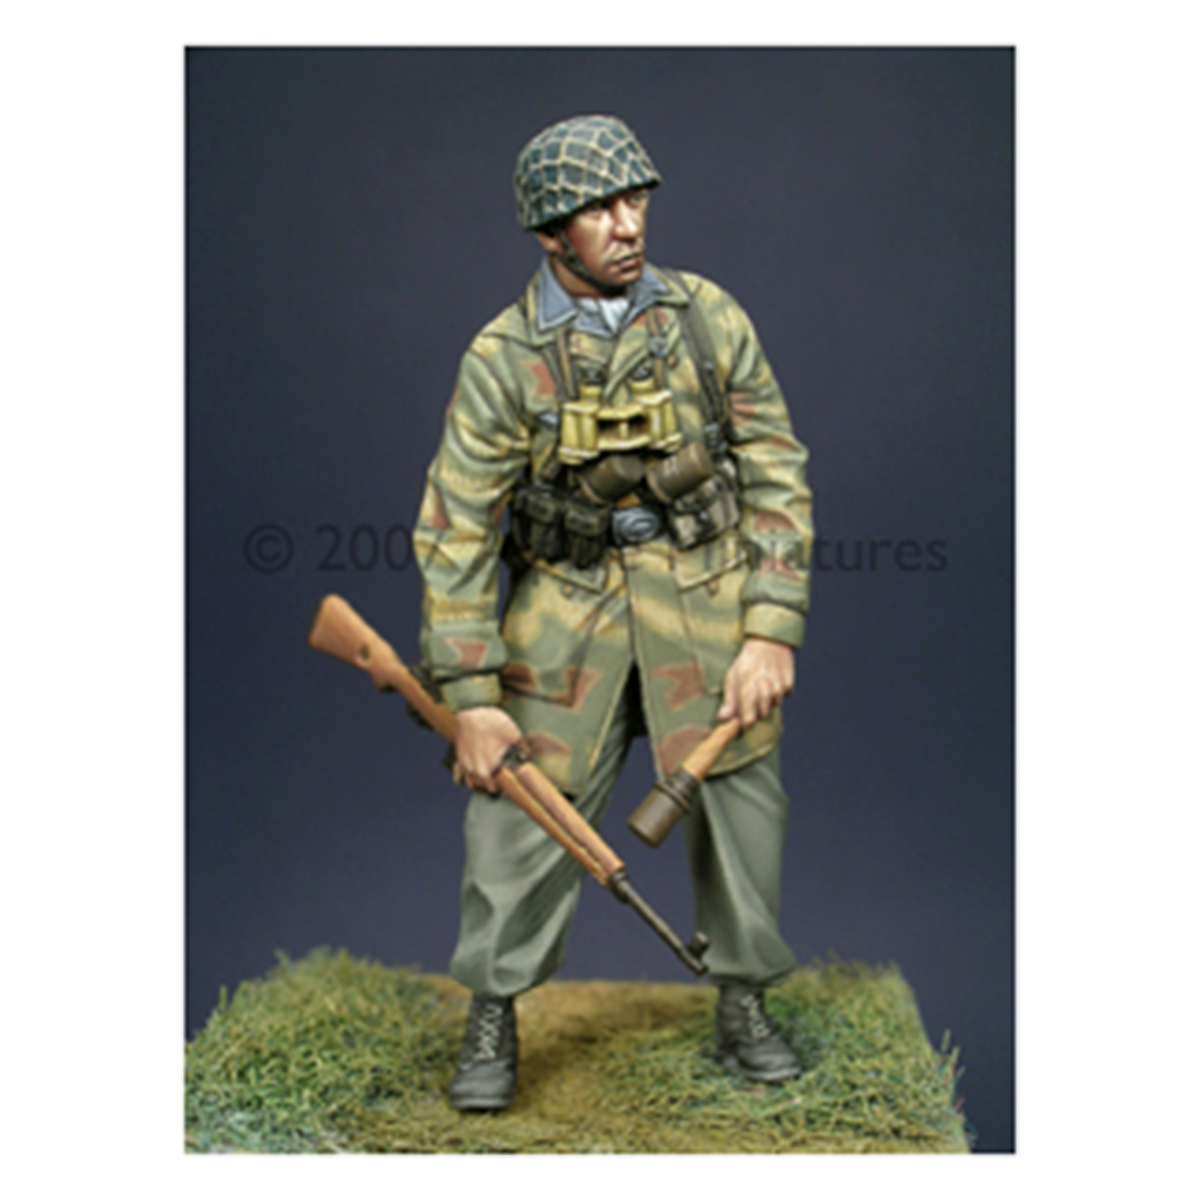 Alpine Miniatures – German Paratrooper 1/35